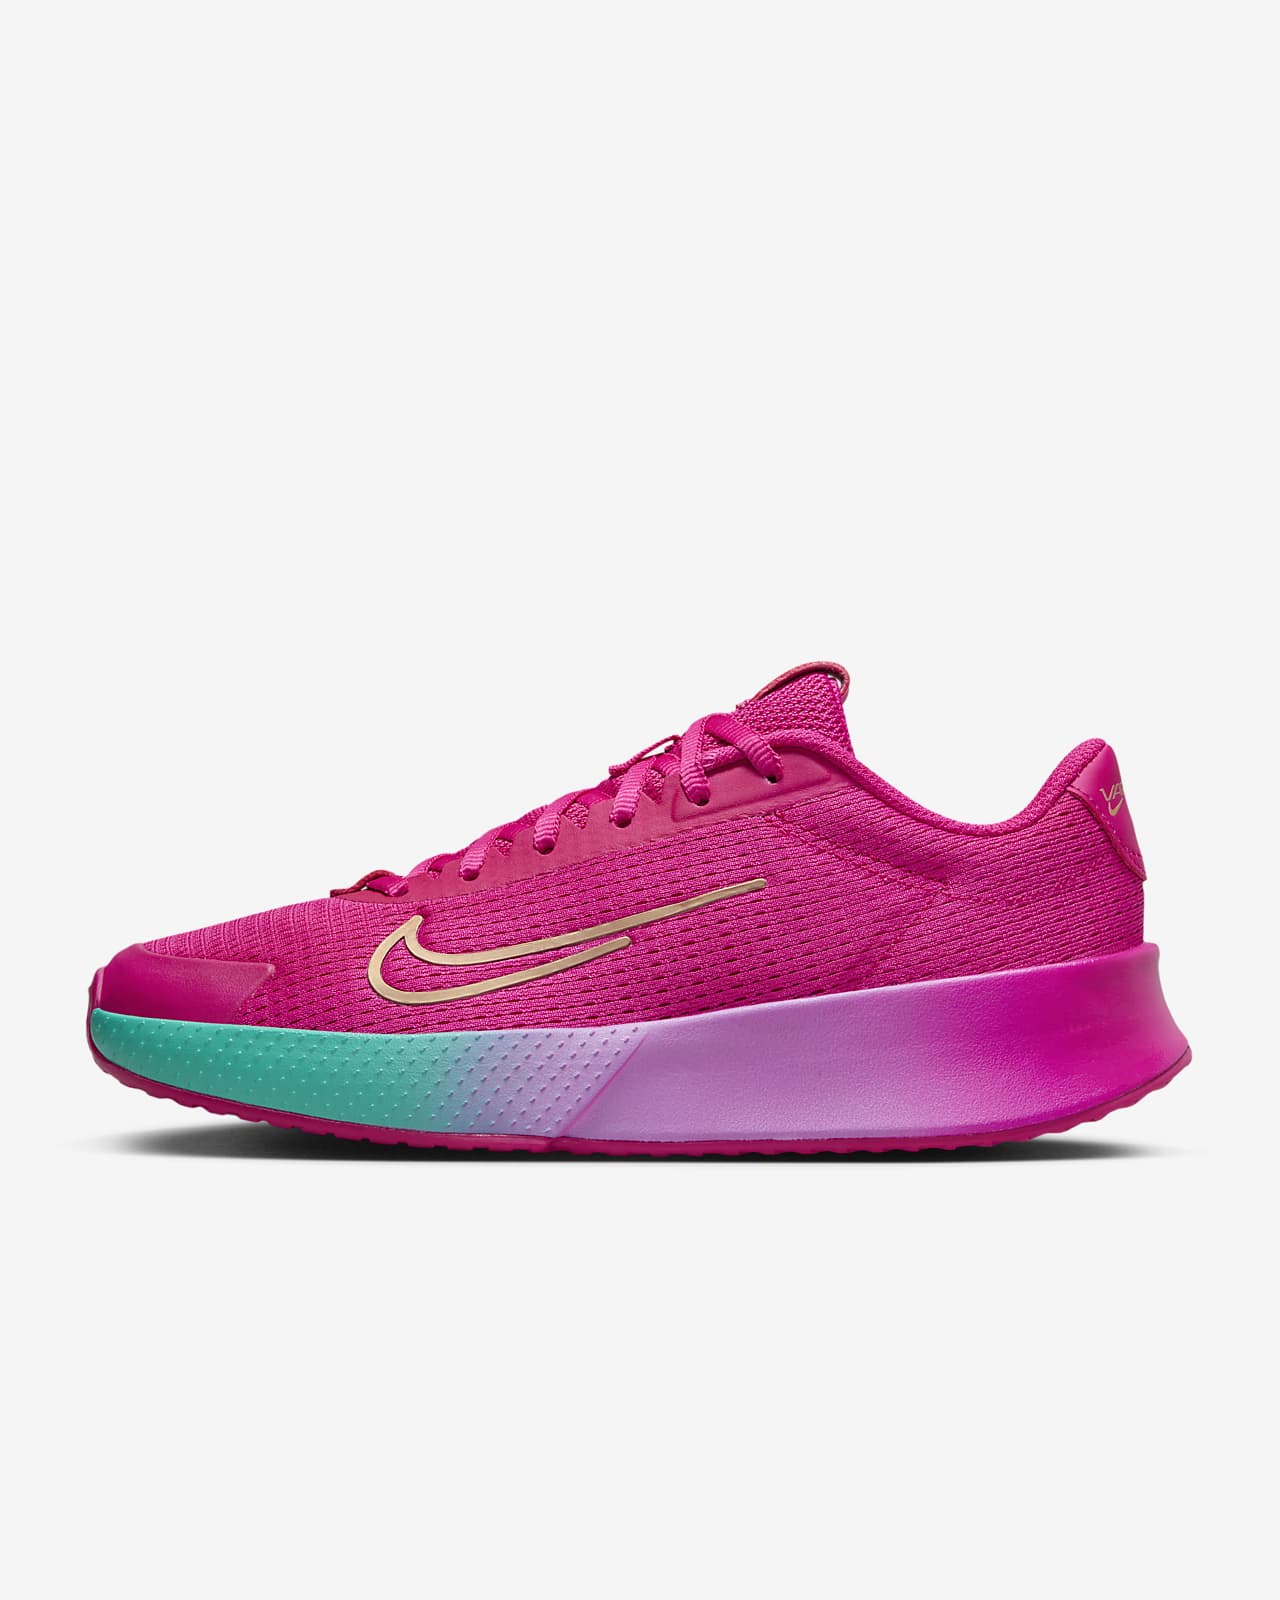 NikeCourt Vapor Lite 2 Premium Women's Hard Court Tennis Shoes